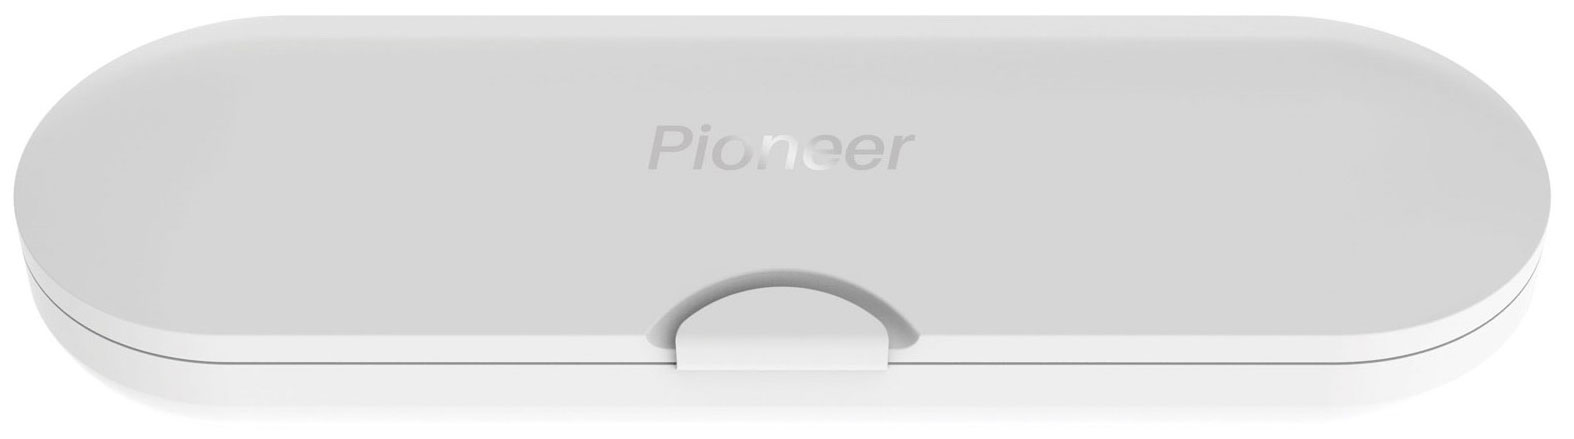 Зубная щетка Pioneer TB-5020 цена и фото